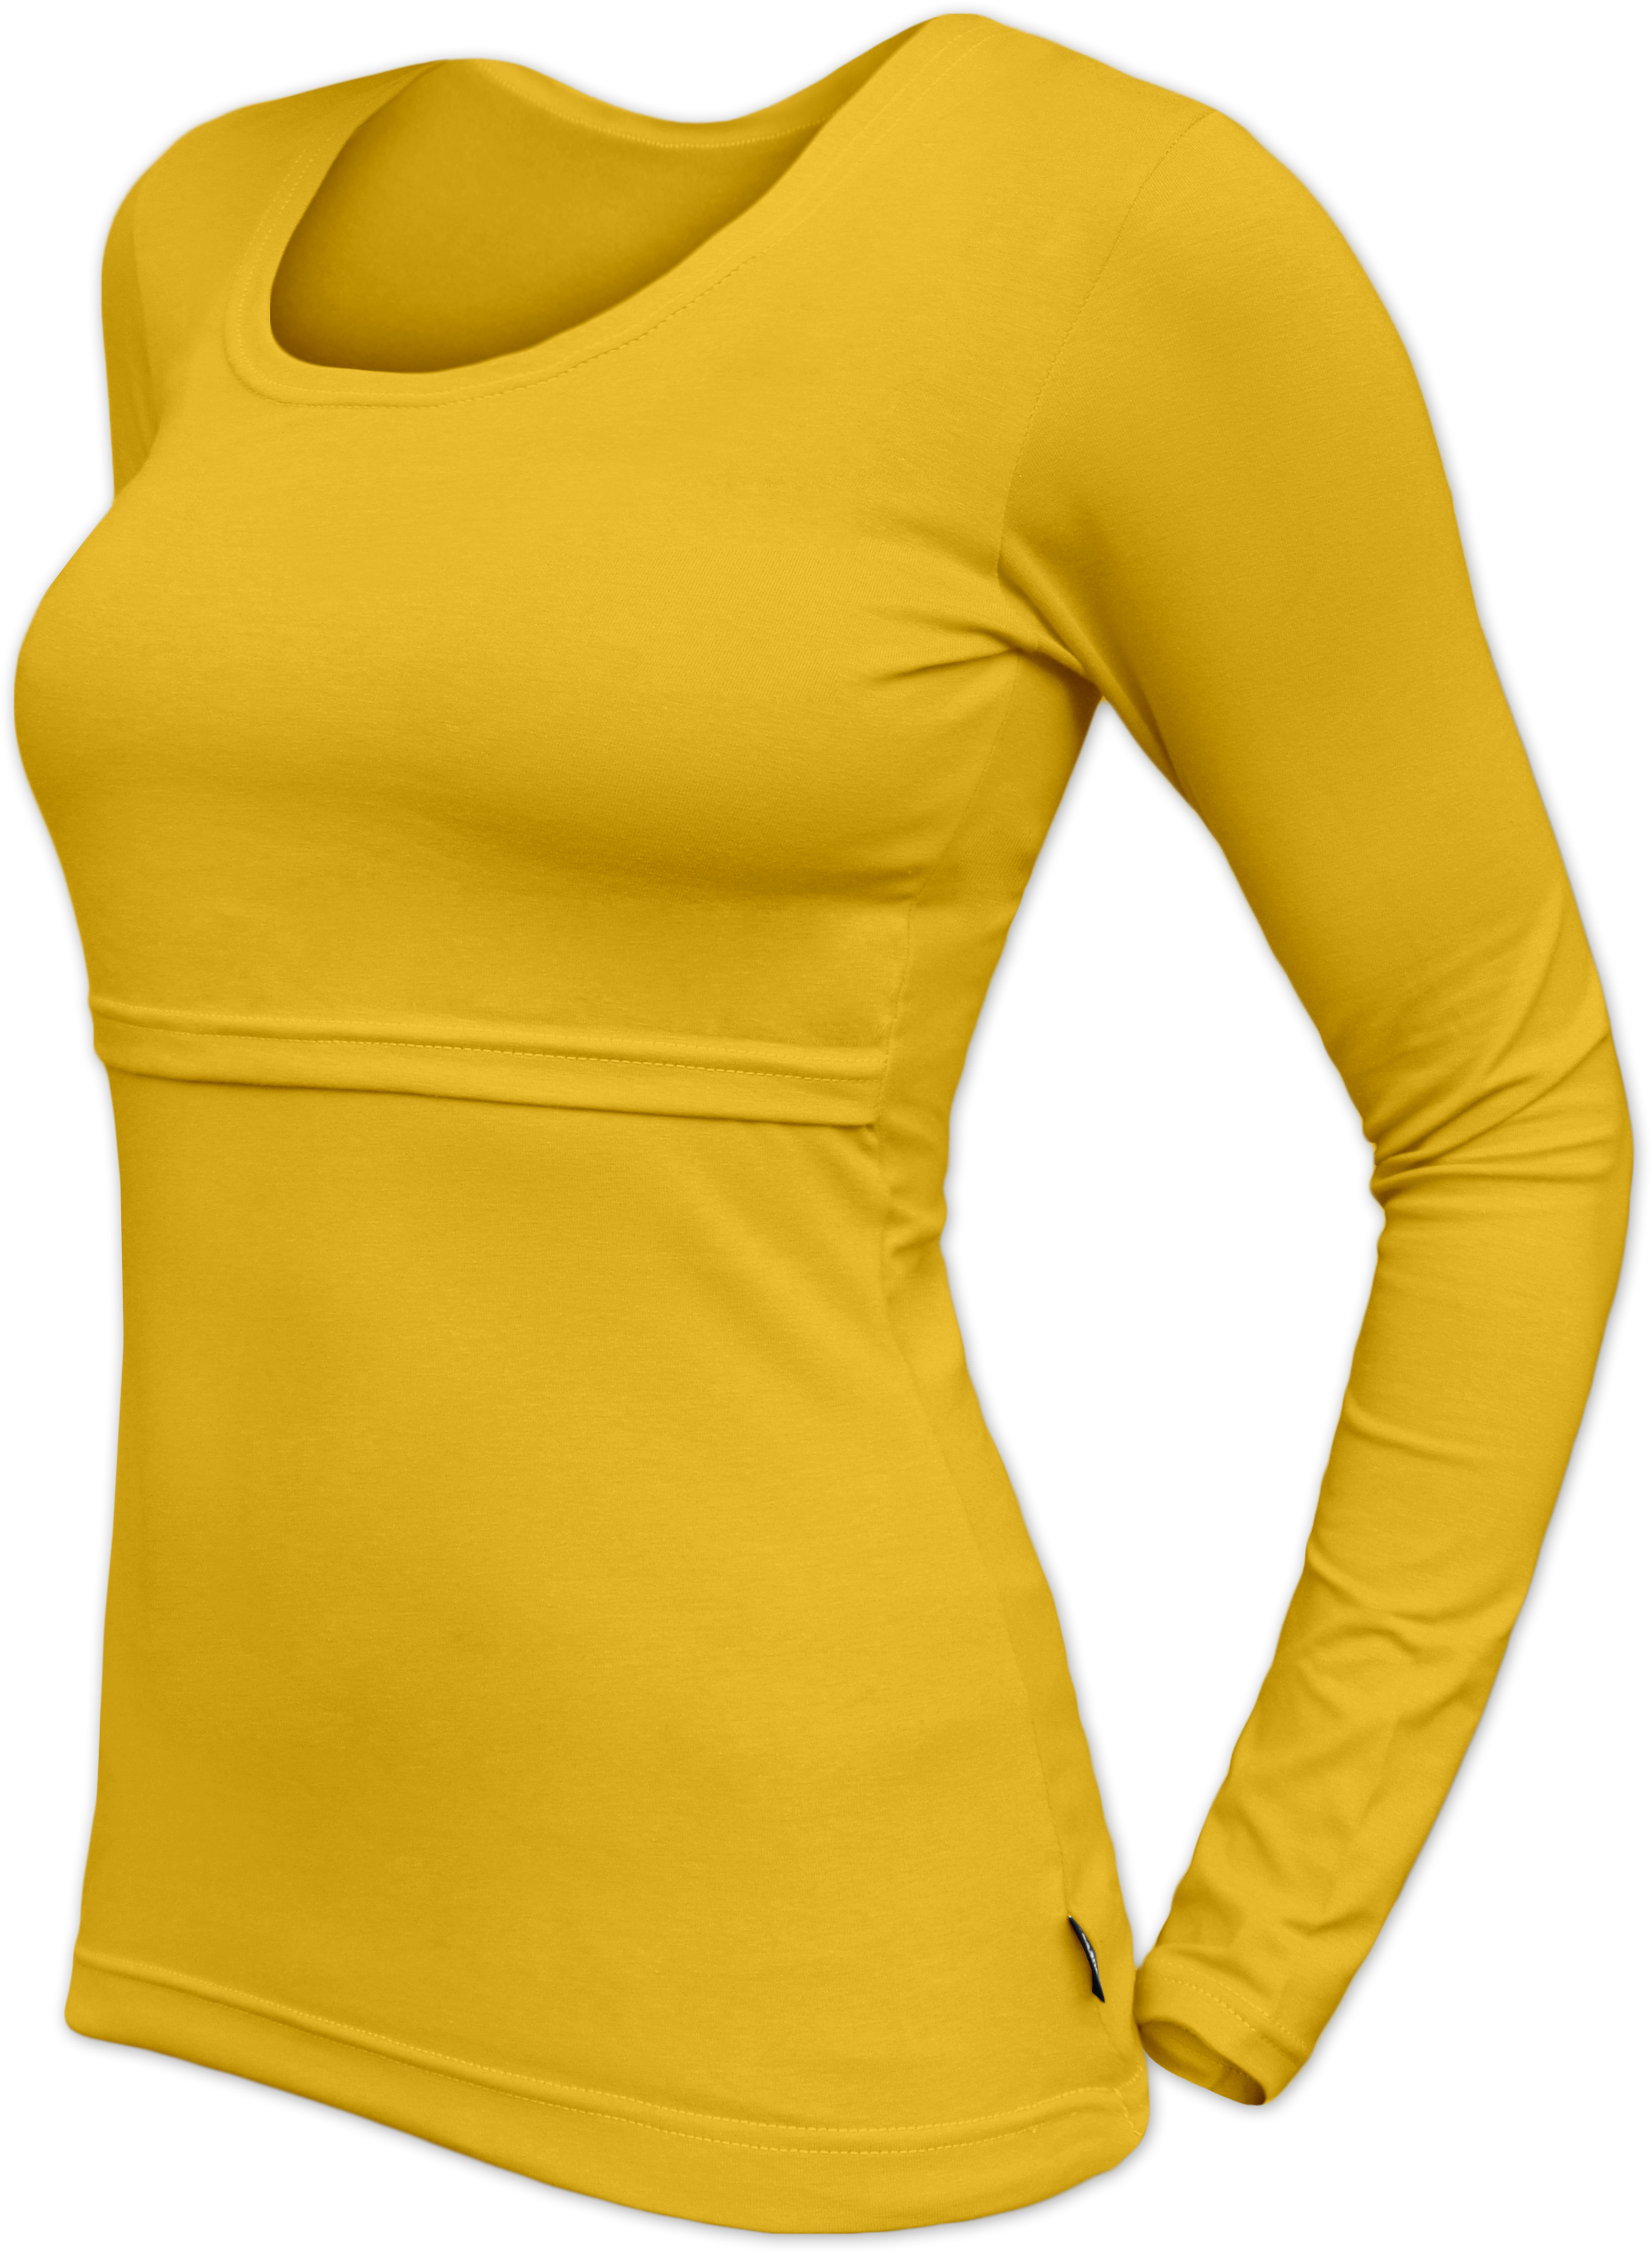 KATERINA- breast-feeding T-shirt, long sleeves, YELLOW-ORANGE S/M